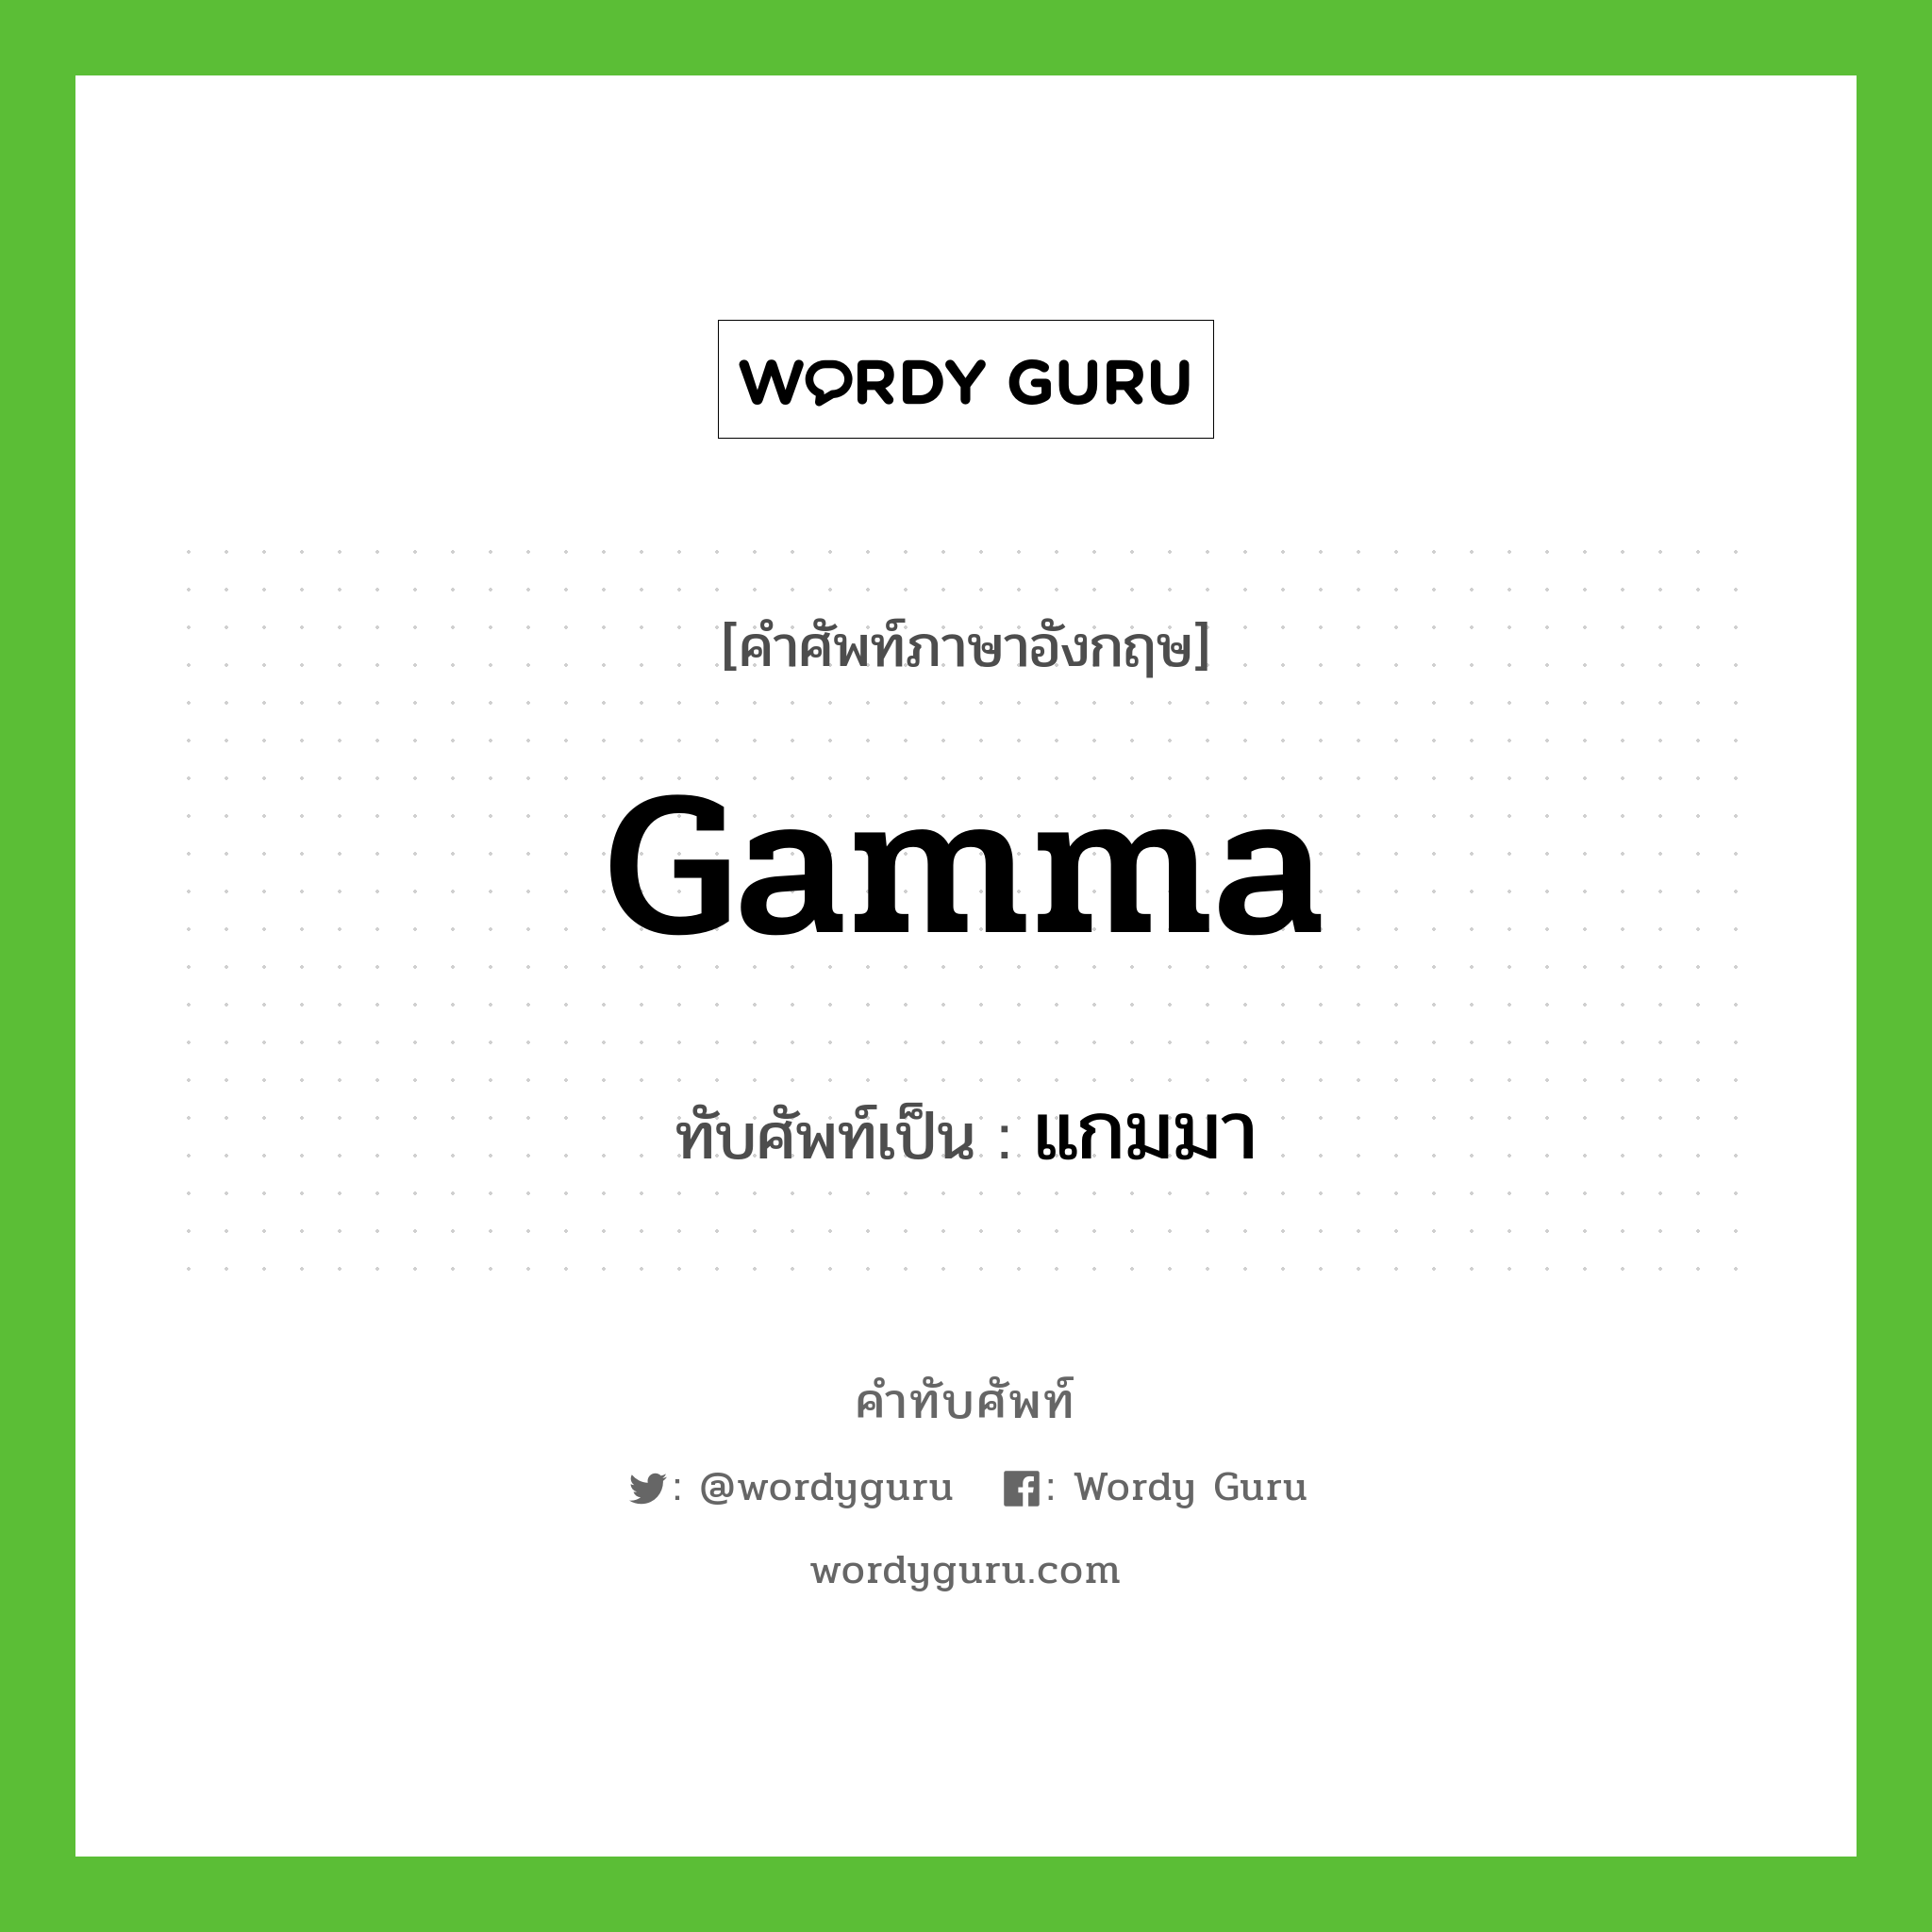 gamma เขียนเป็นคำไทยว่าอะไร?, คำศัพท์ภาษาอังกฤษ gamma ทับศัพท์เป็น แกมมา